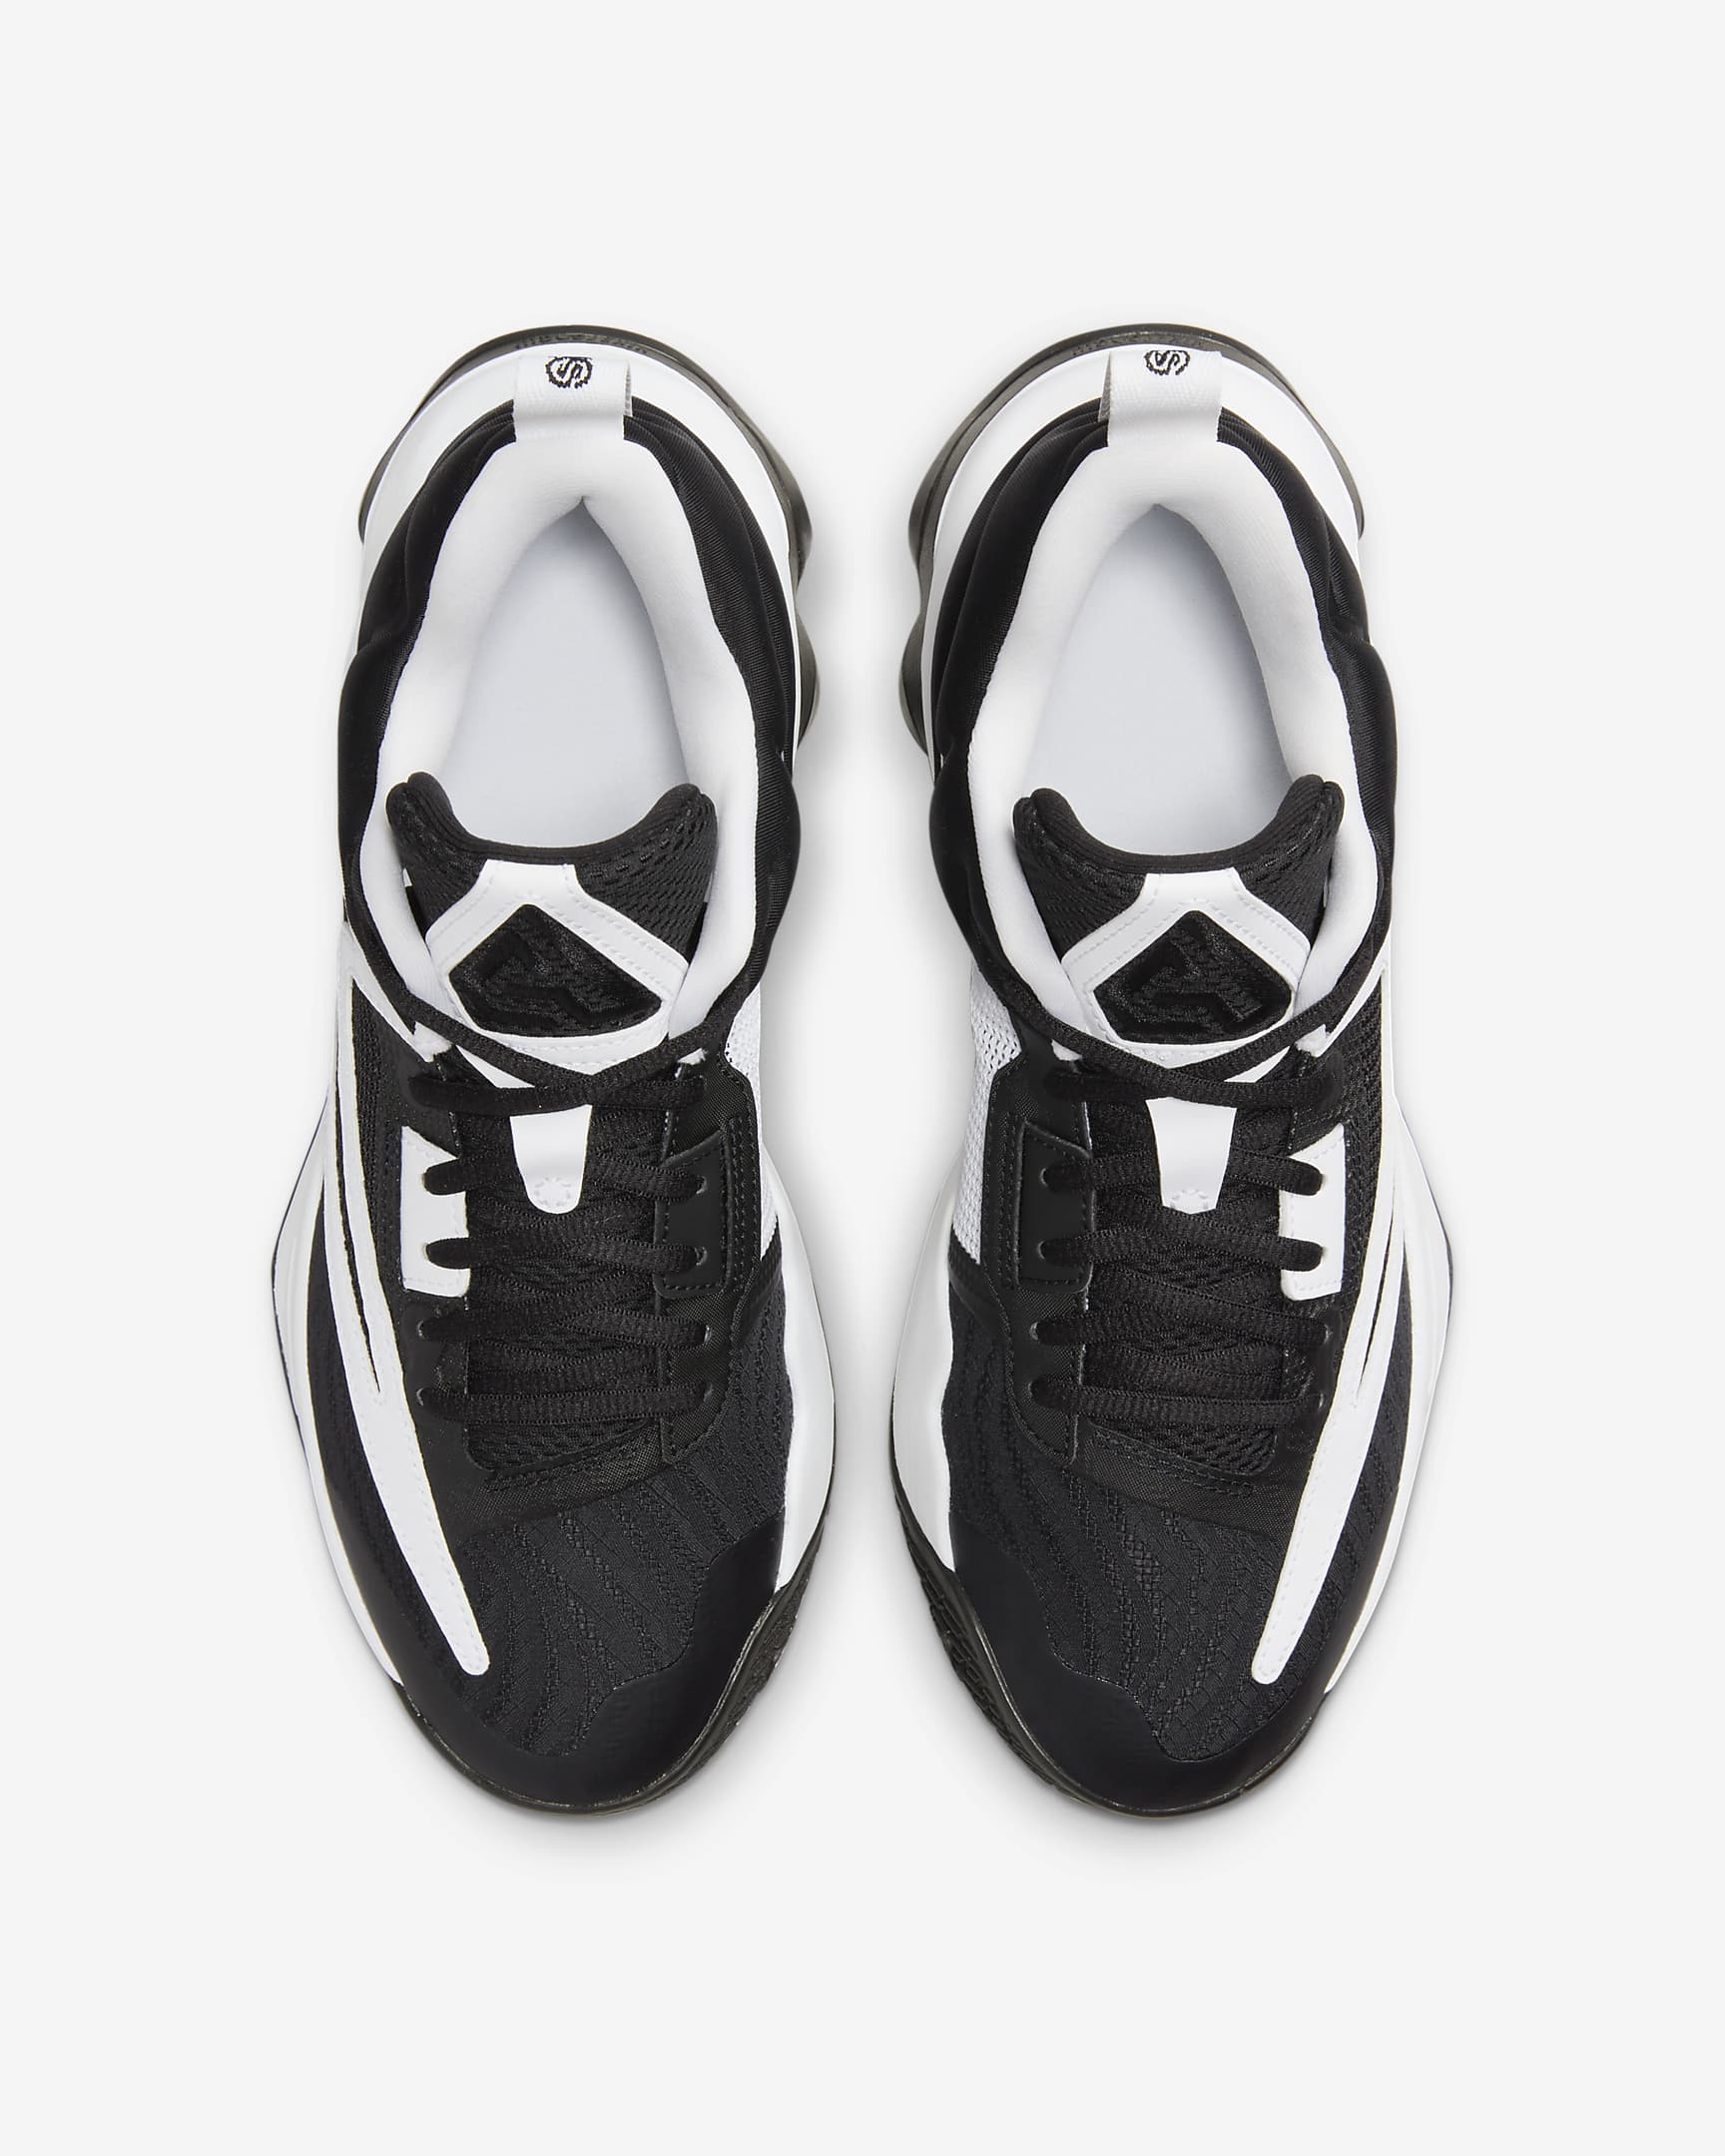 Giannis Immortality 3 Basketball Shoes - Black/White/White/Black